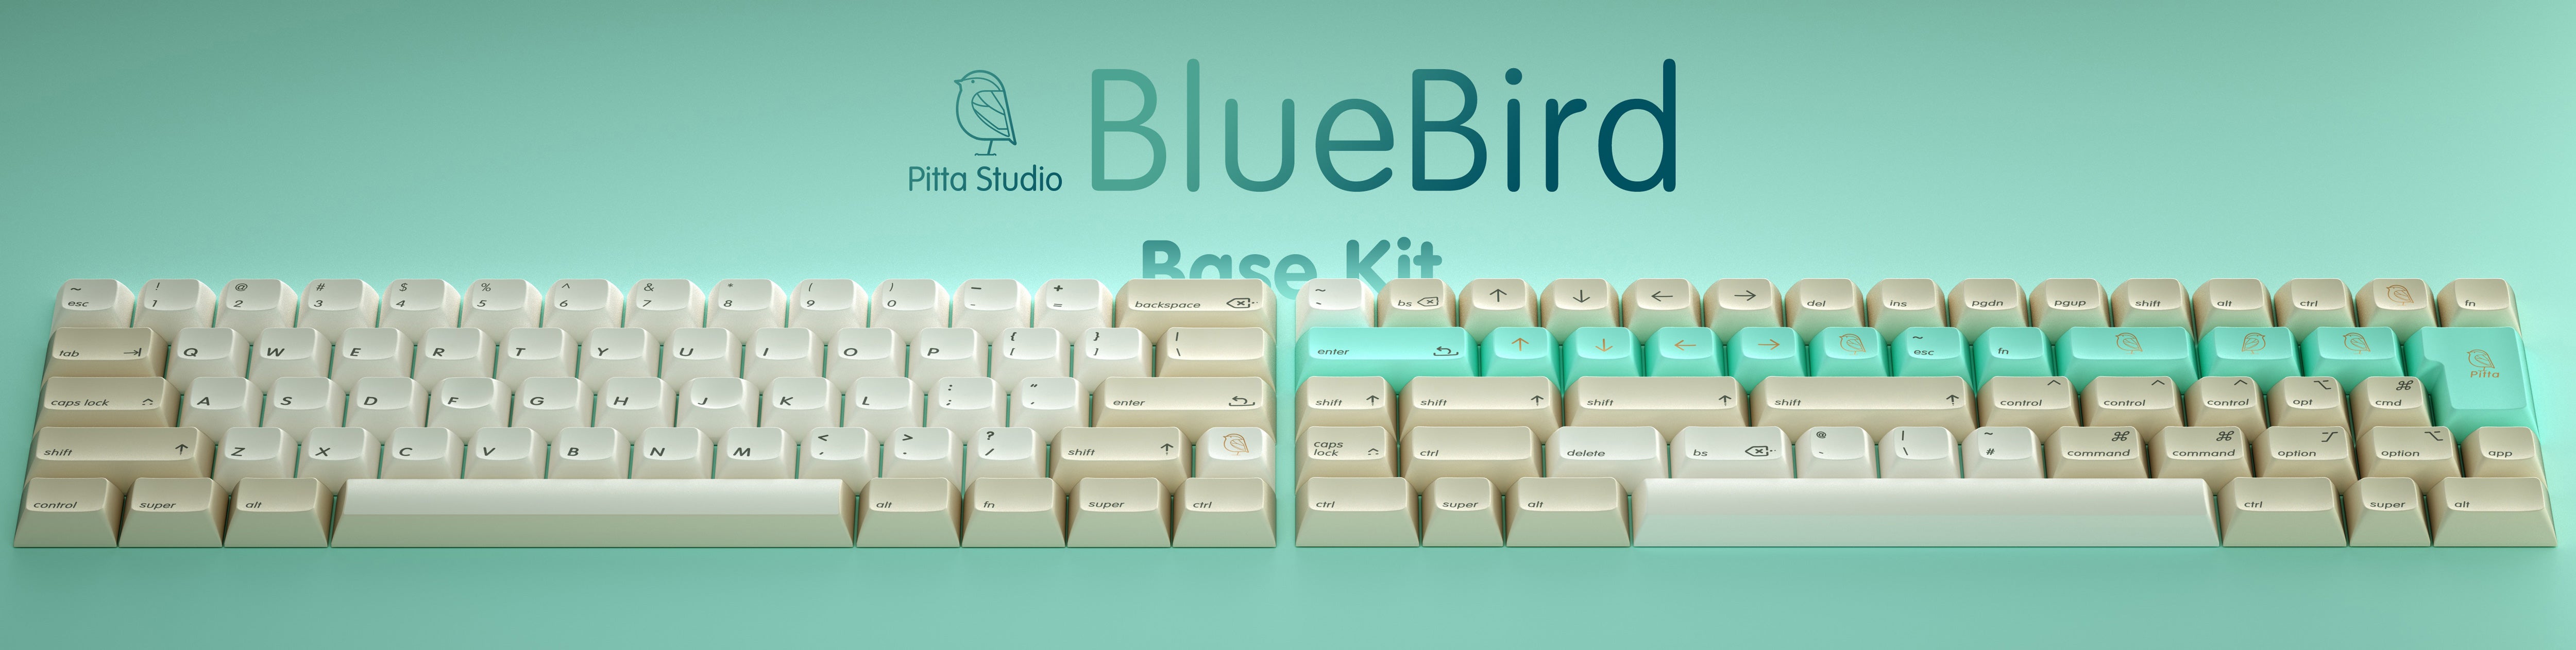 Blue Bird DSA Keycaps